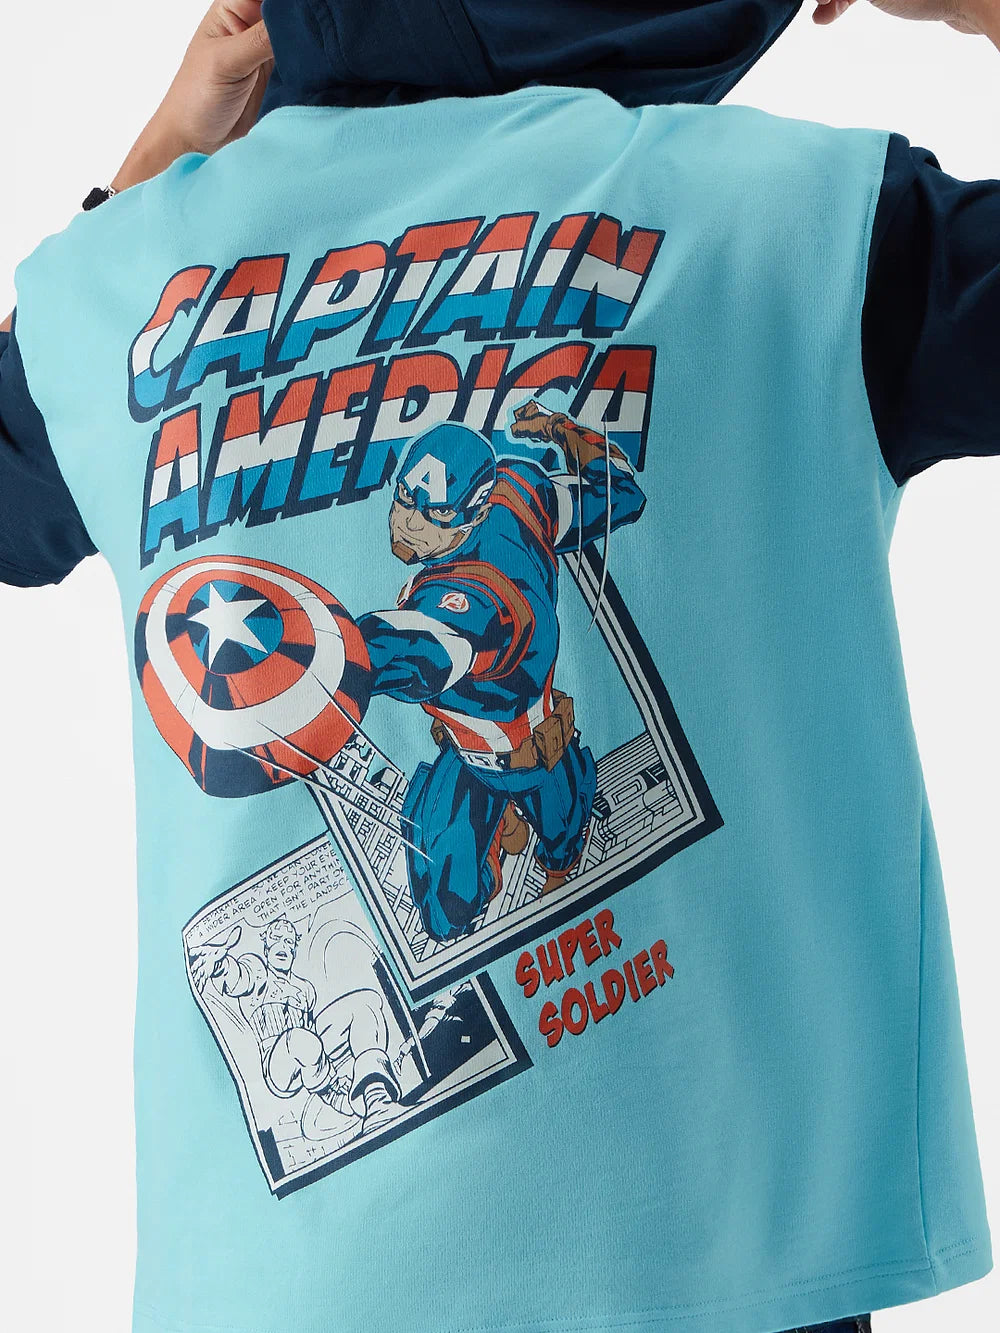 Captain America Super Soldier (UK version)